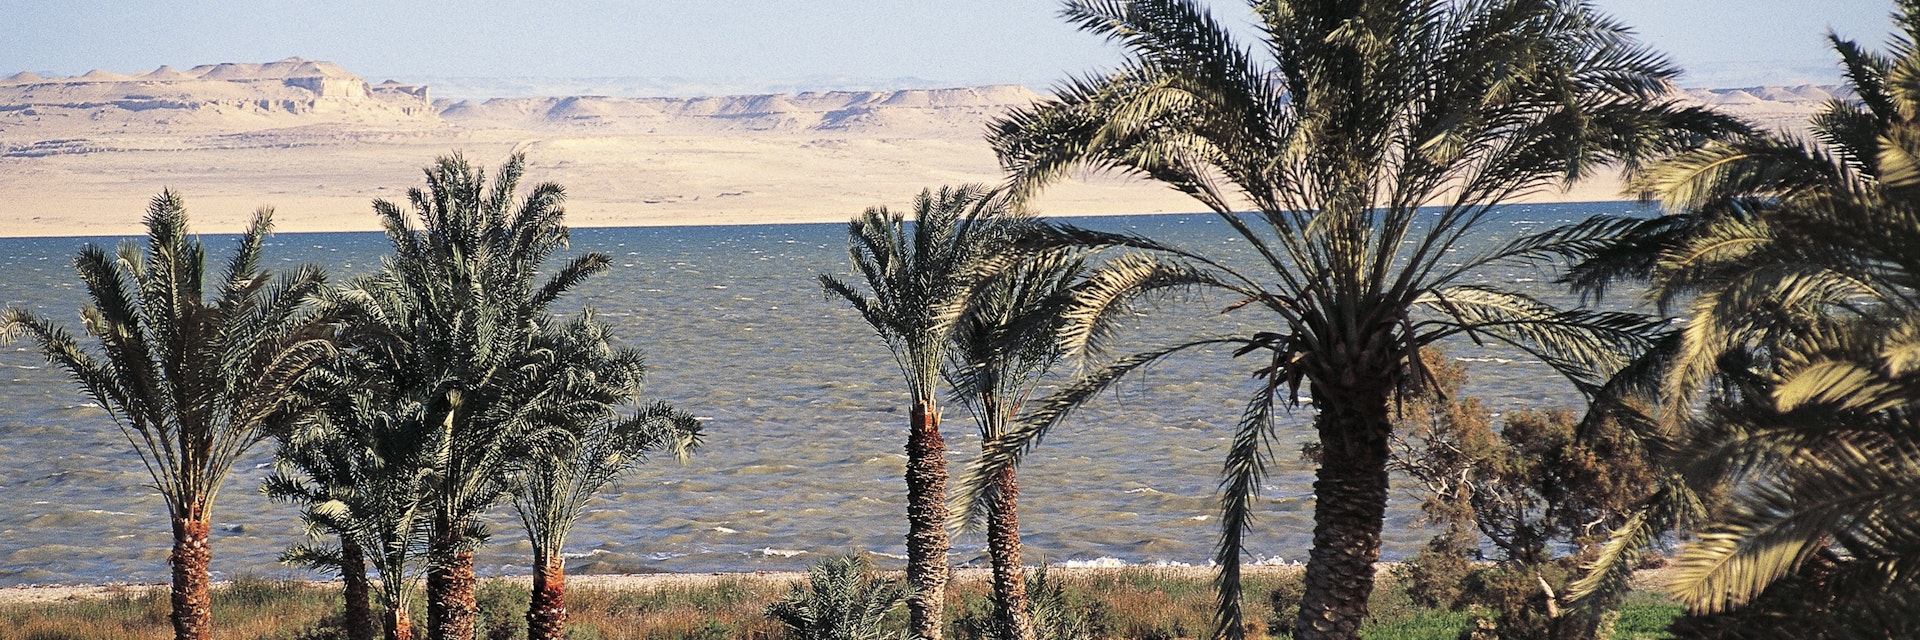 EGYPT - MARCH 25: Palm grove, Arecaceae, lake of Birket Qarun, Al-Fayoum oasis, Egypt. (Photo by DeAgostini/Getty Images)